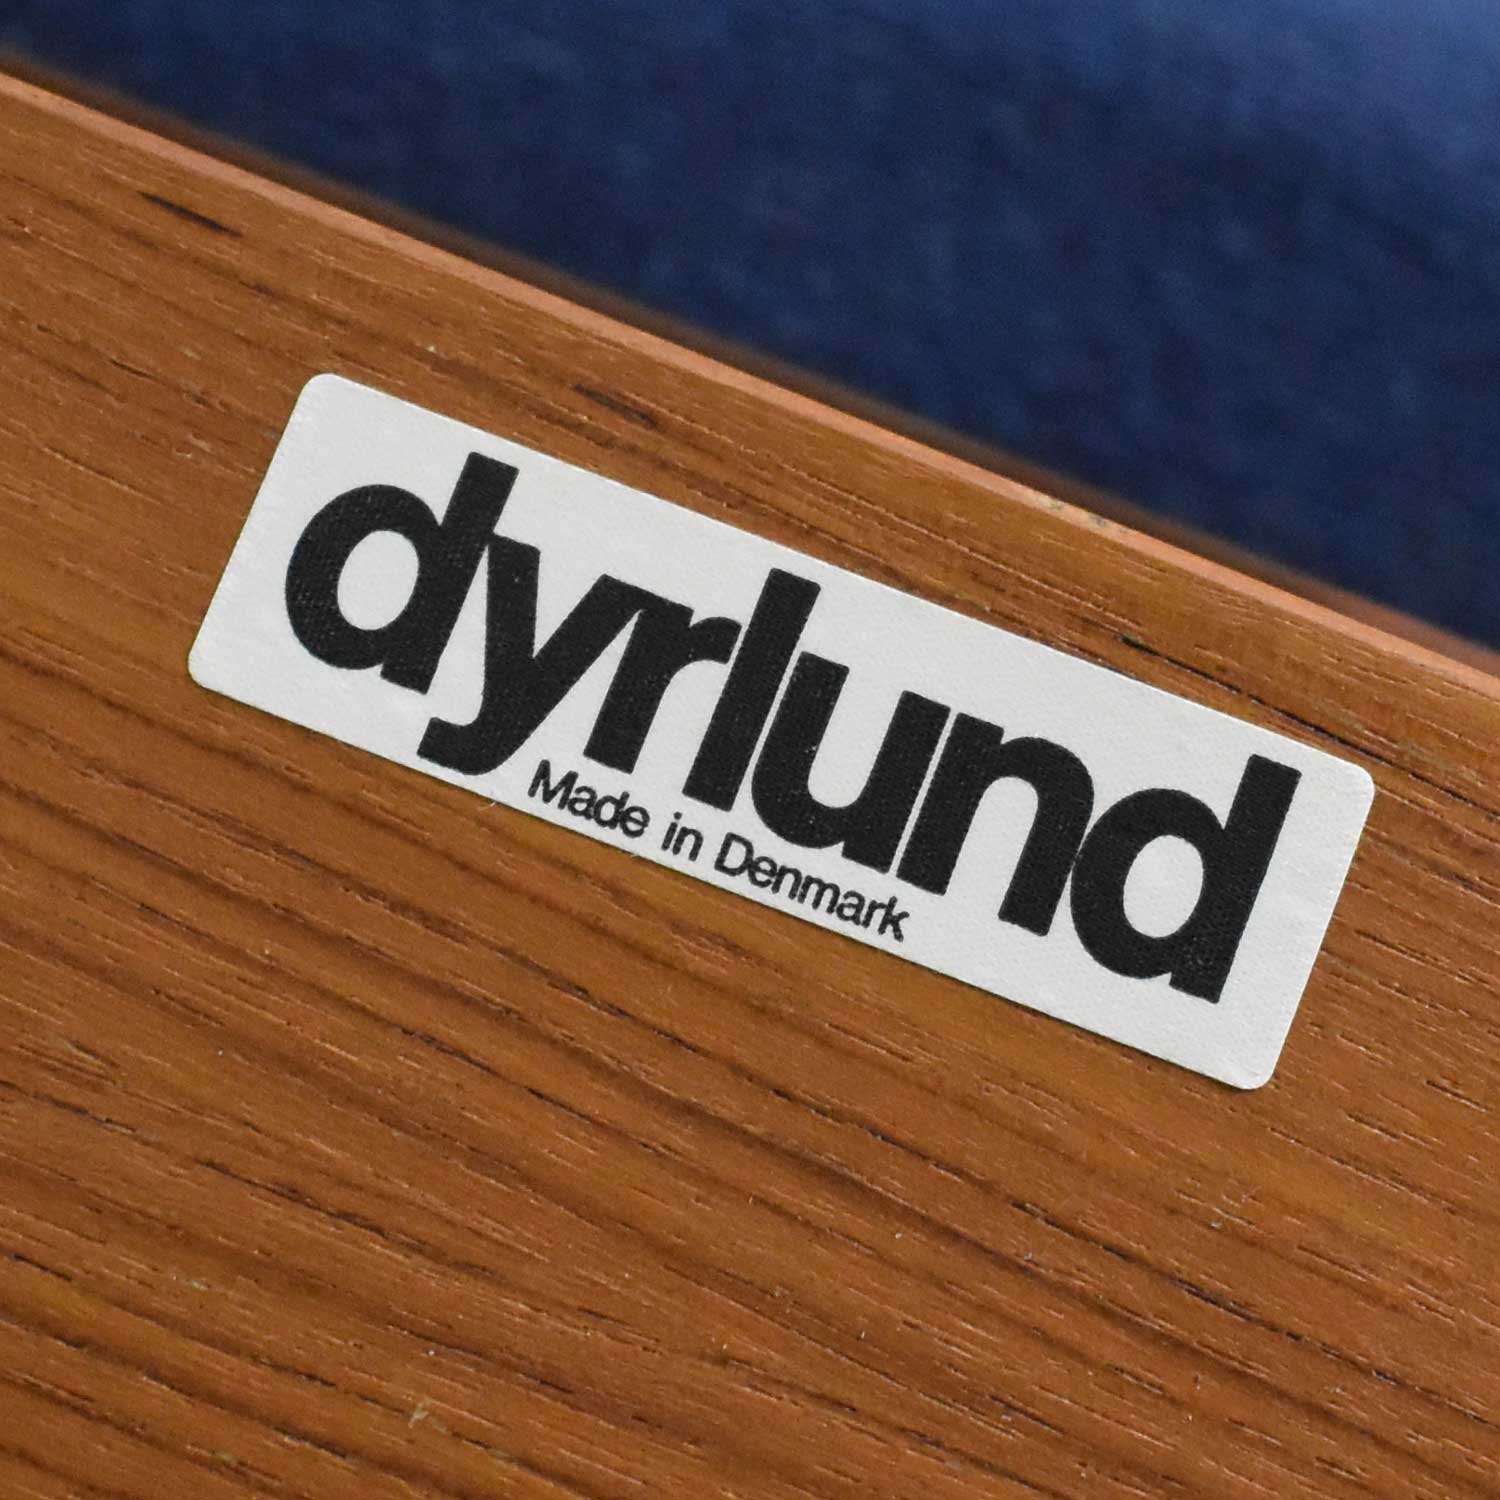 Teak Scandinavian Modern Cal King Storage Platform Bed & Swing-Arm Nightstands by Dyrlund